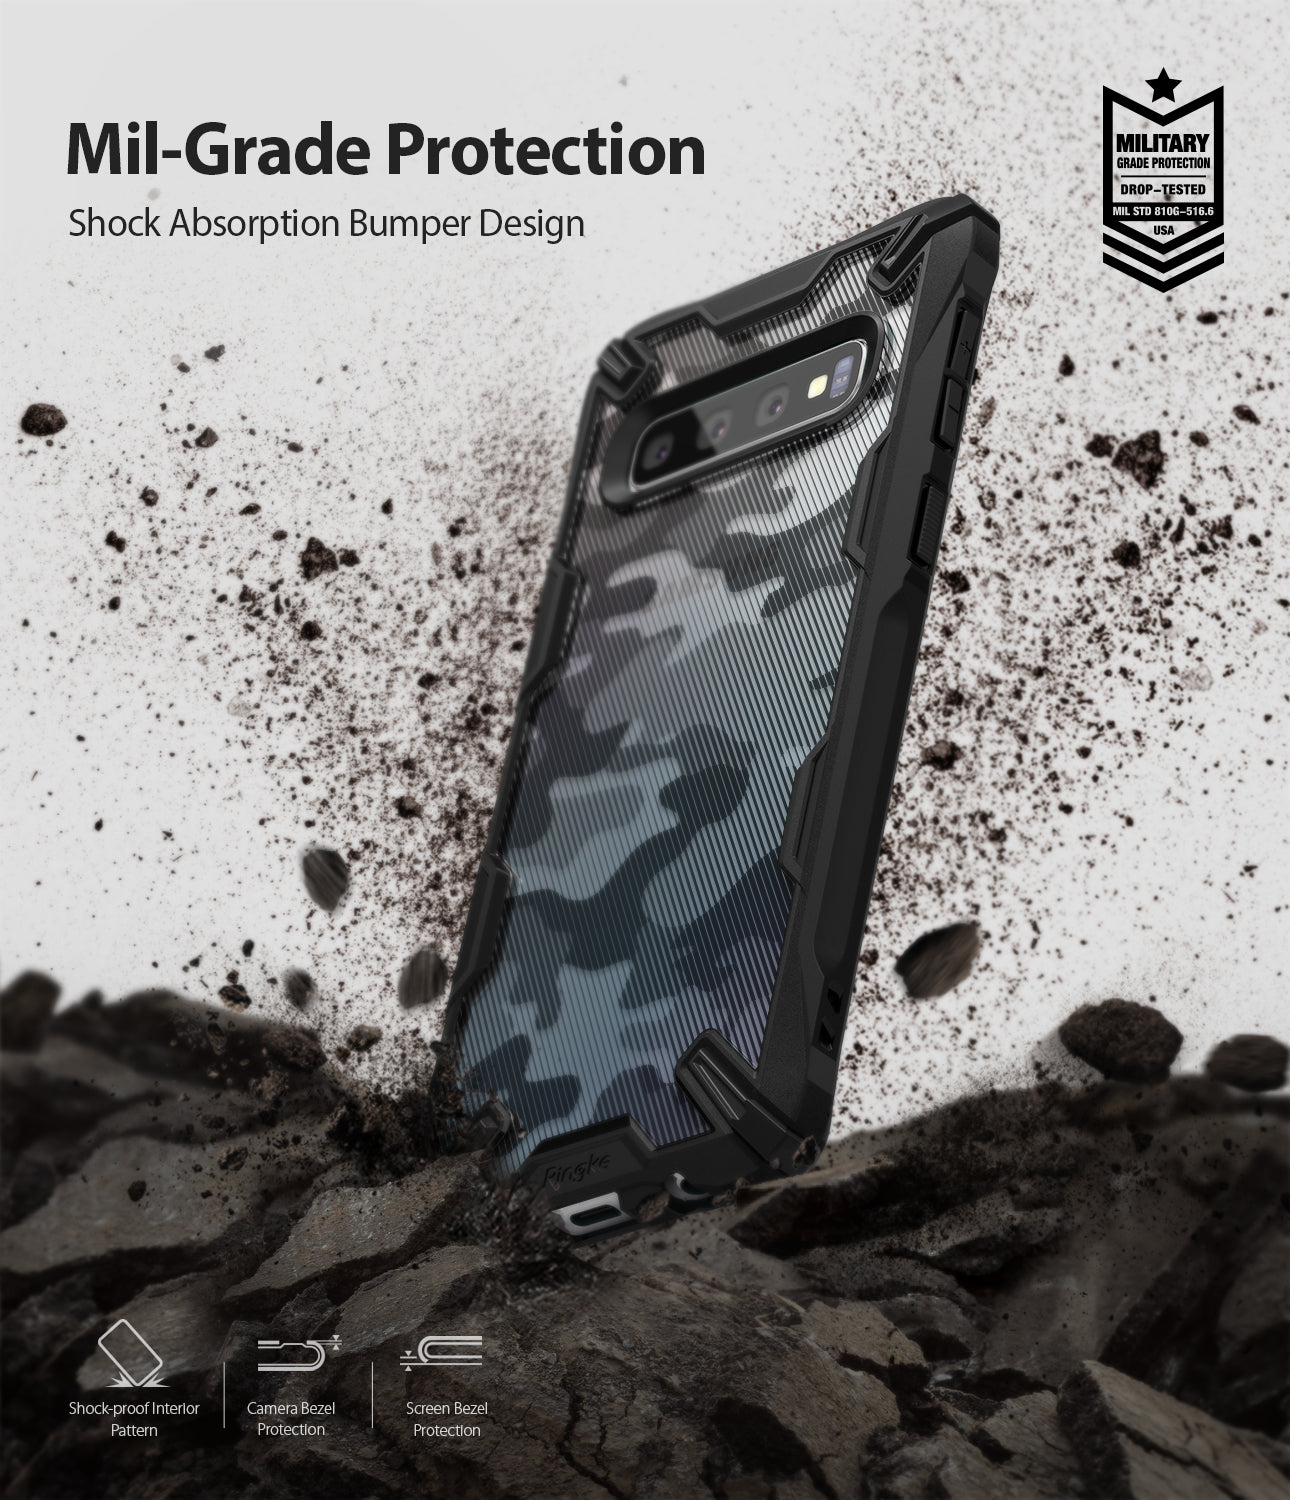 mil-grade protection of shock absorption bumper design